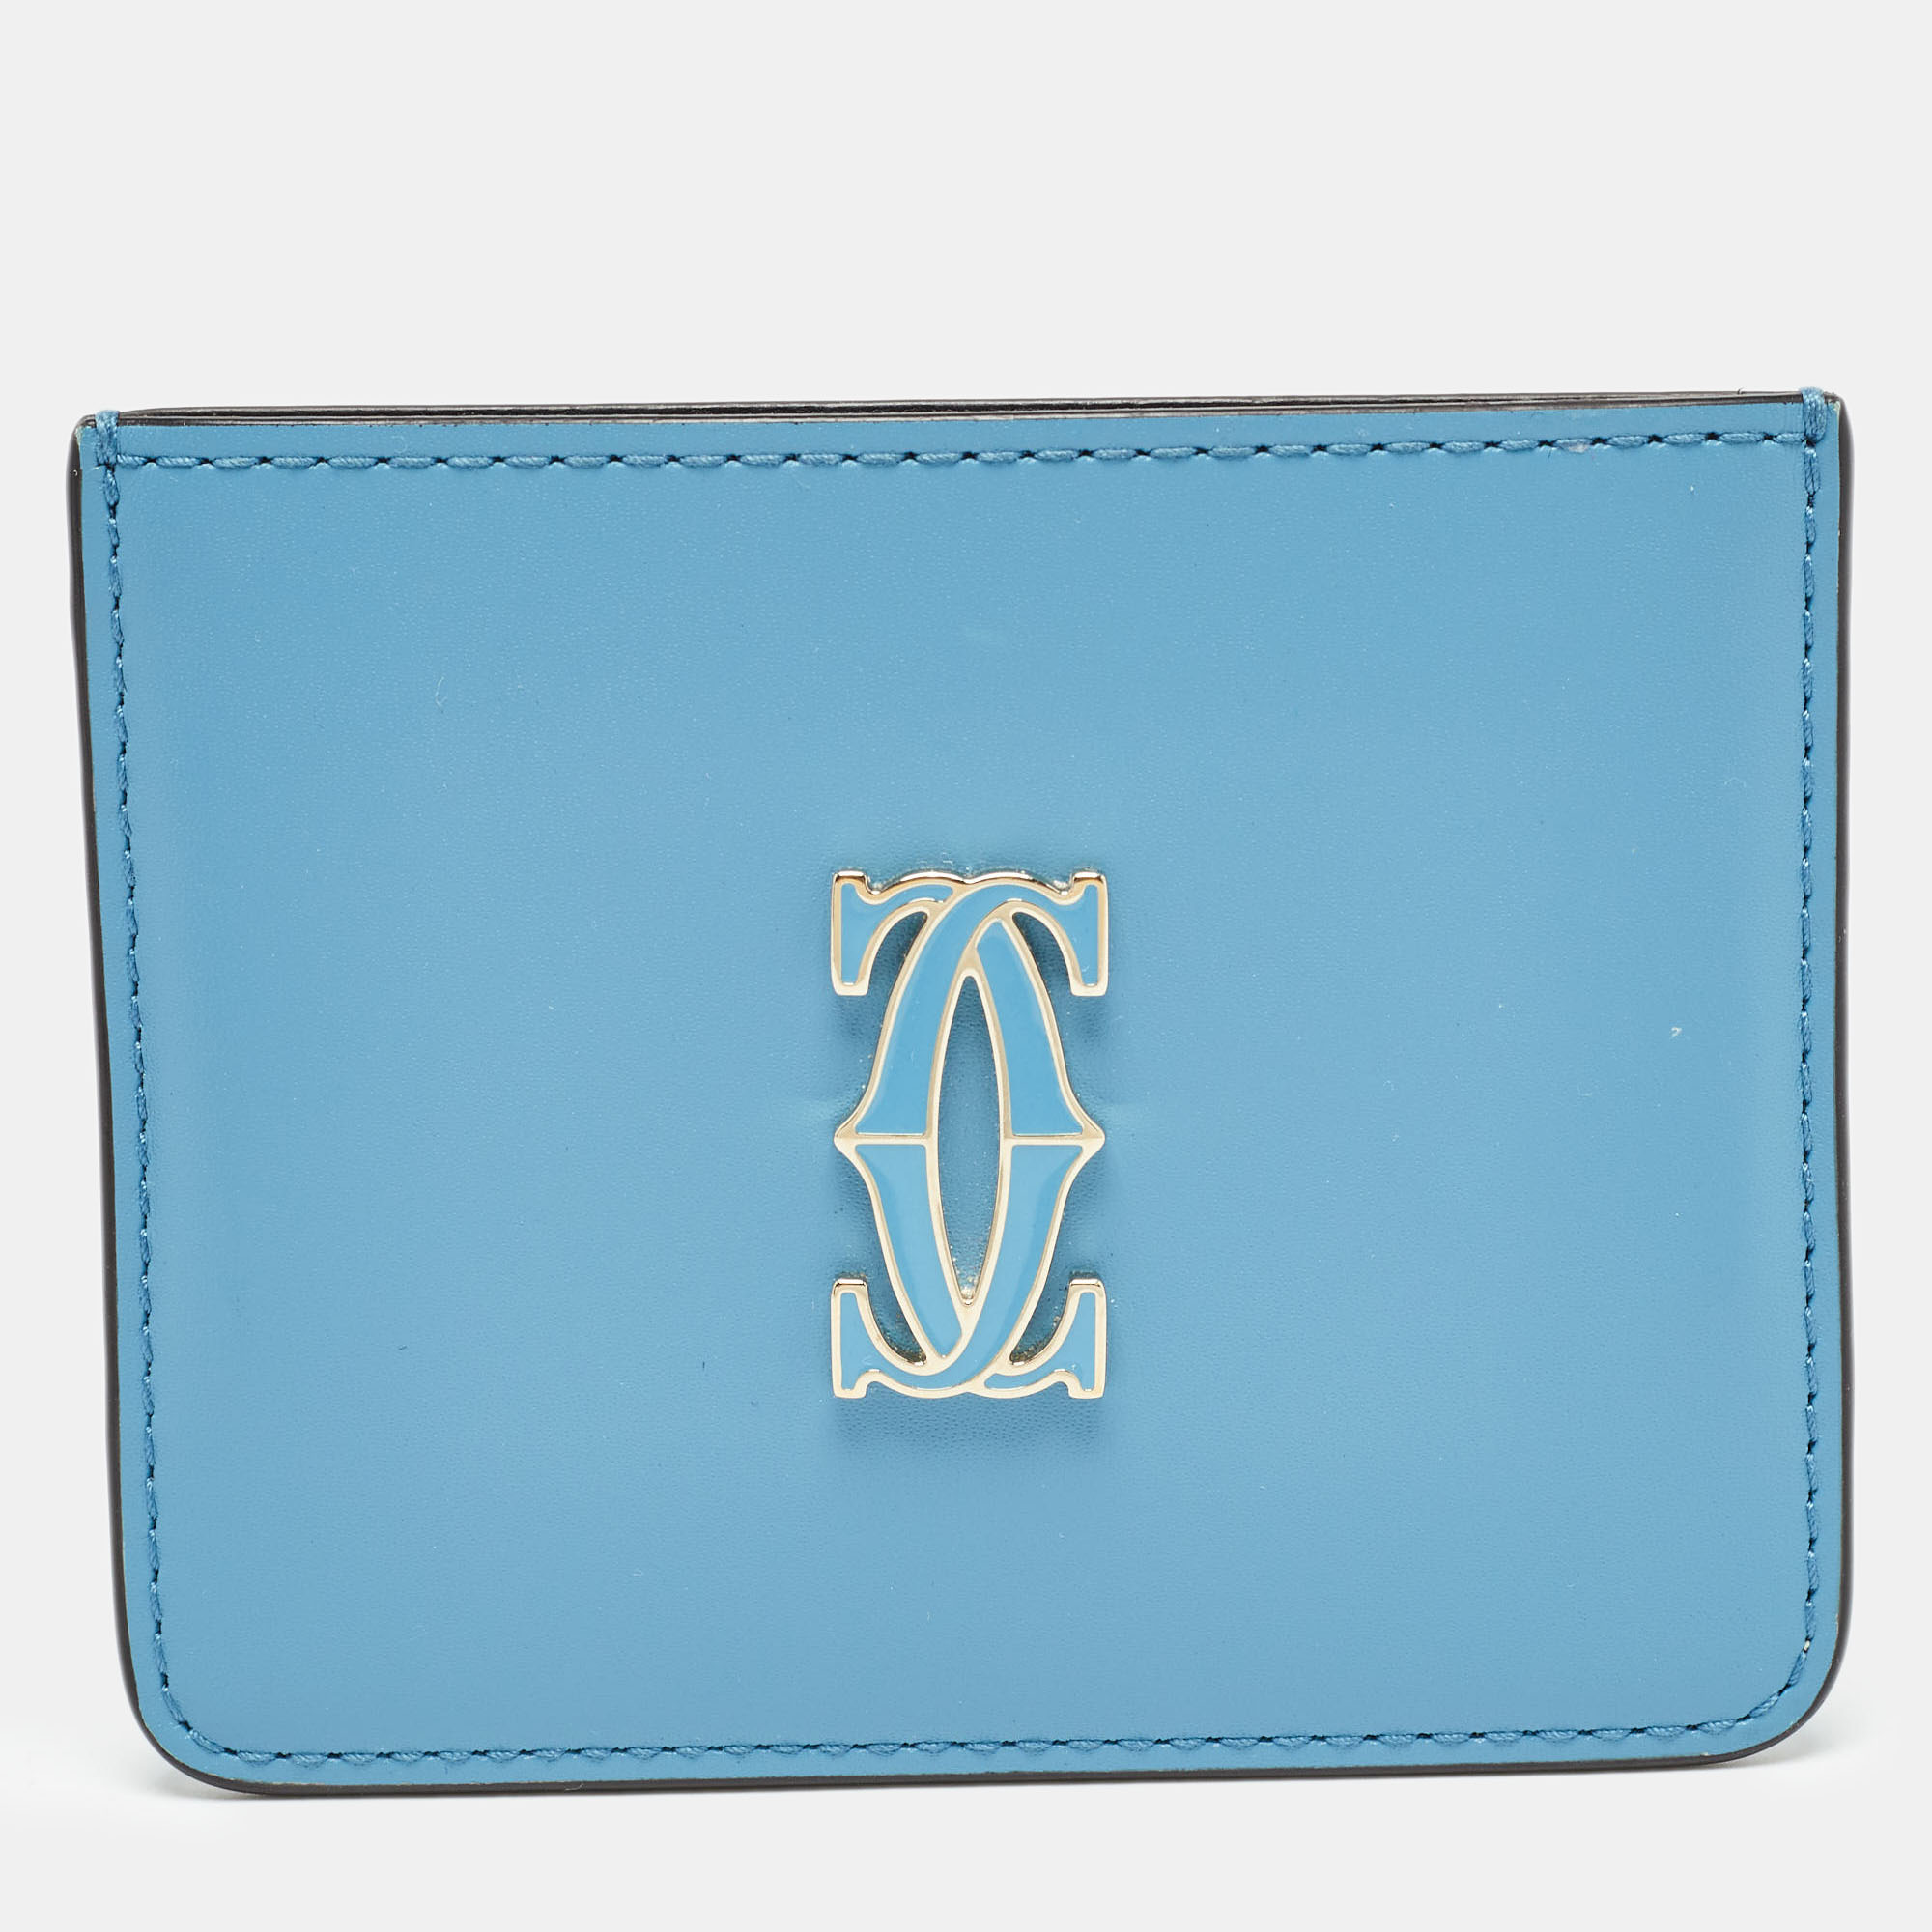 Cartier light blue leather c de cartier card holder